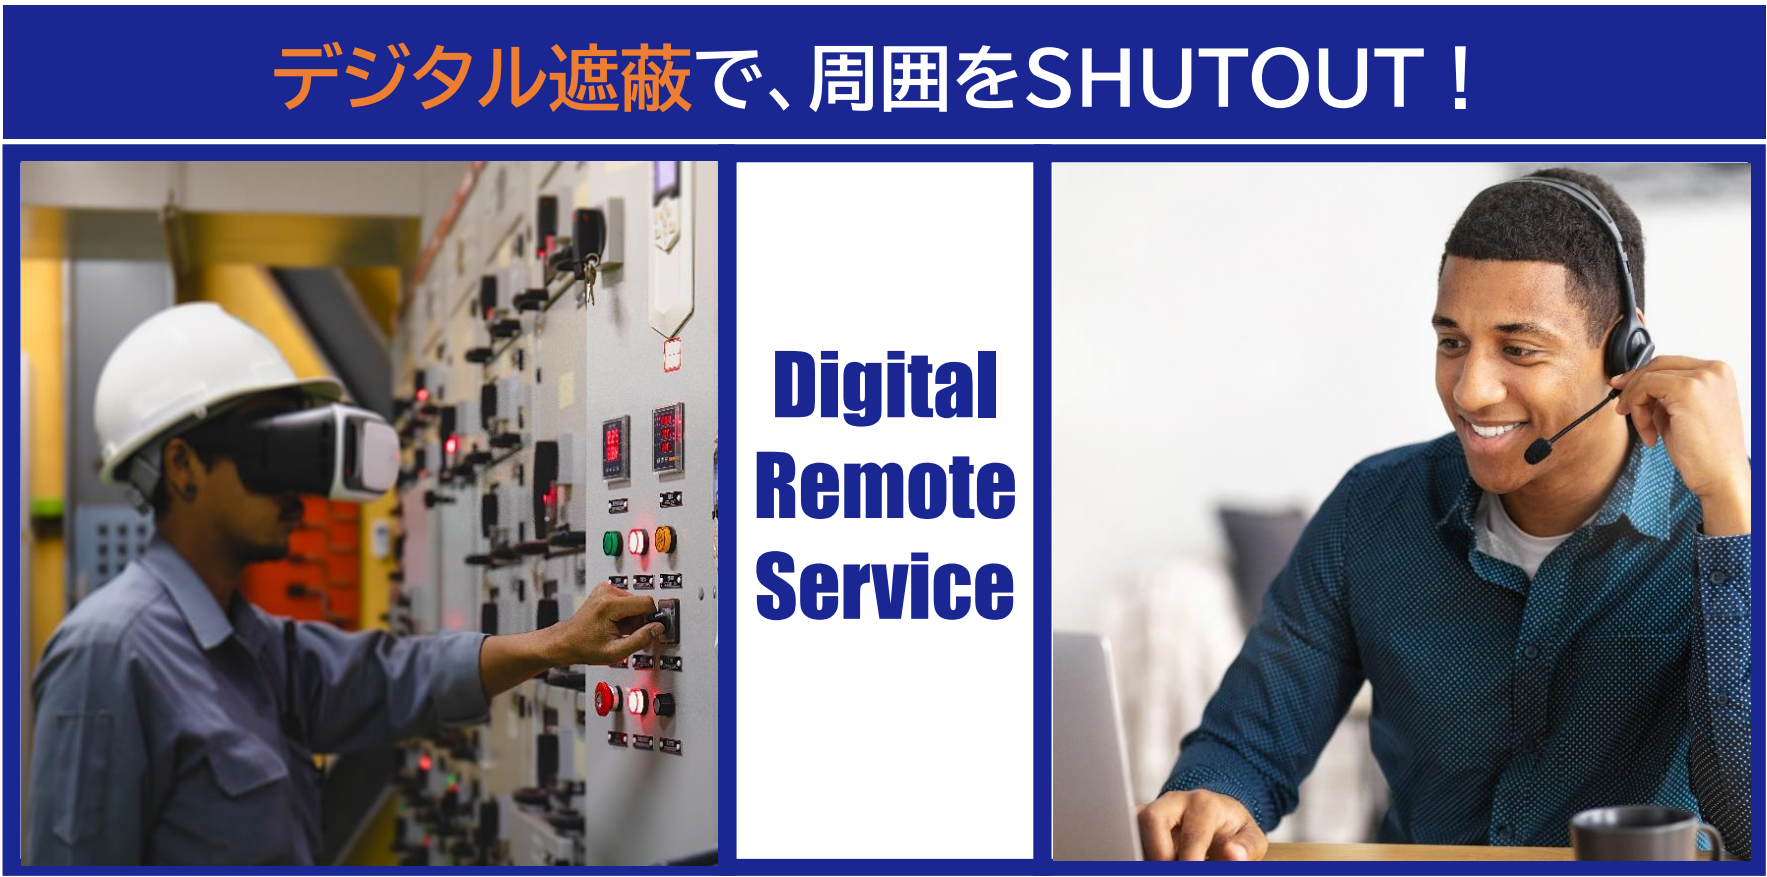 Digital Remote Service